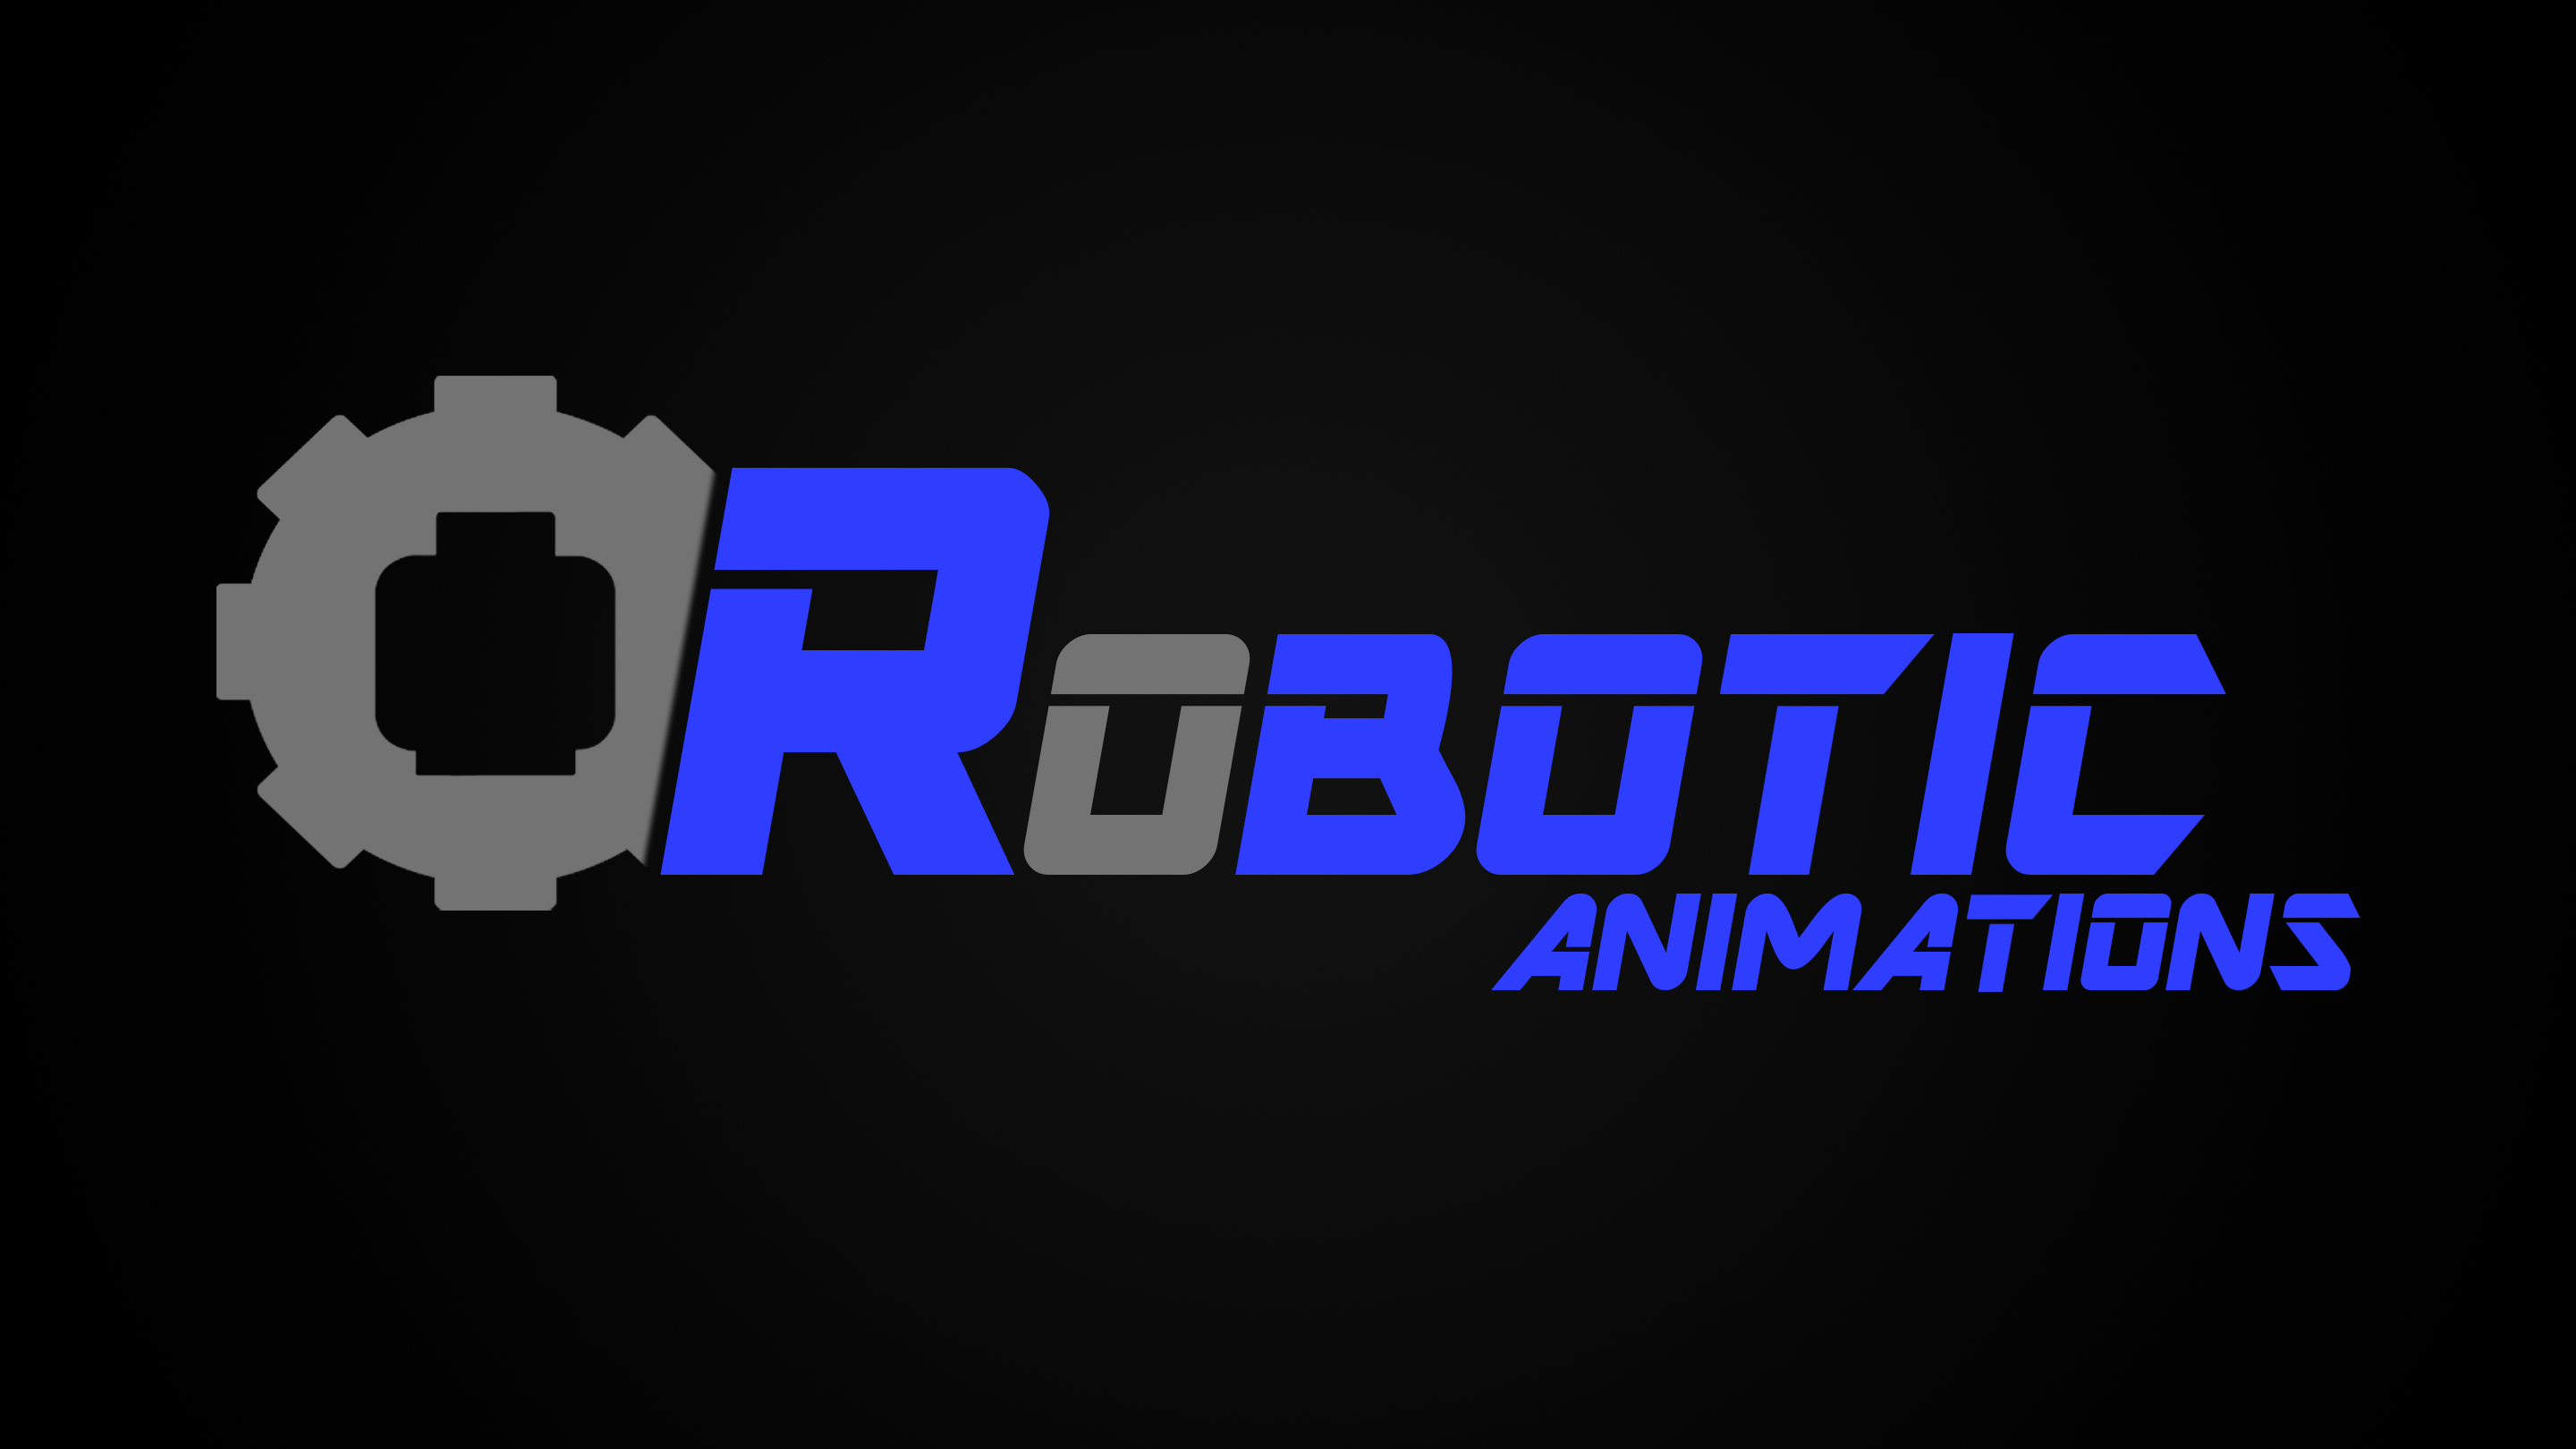 http://www.brickshelf.com/gallery/legoguy501/Random/robotic_animations1_5.png